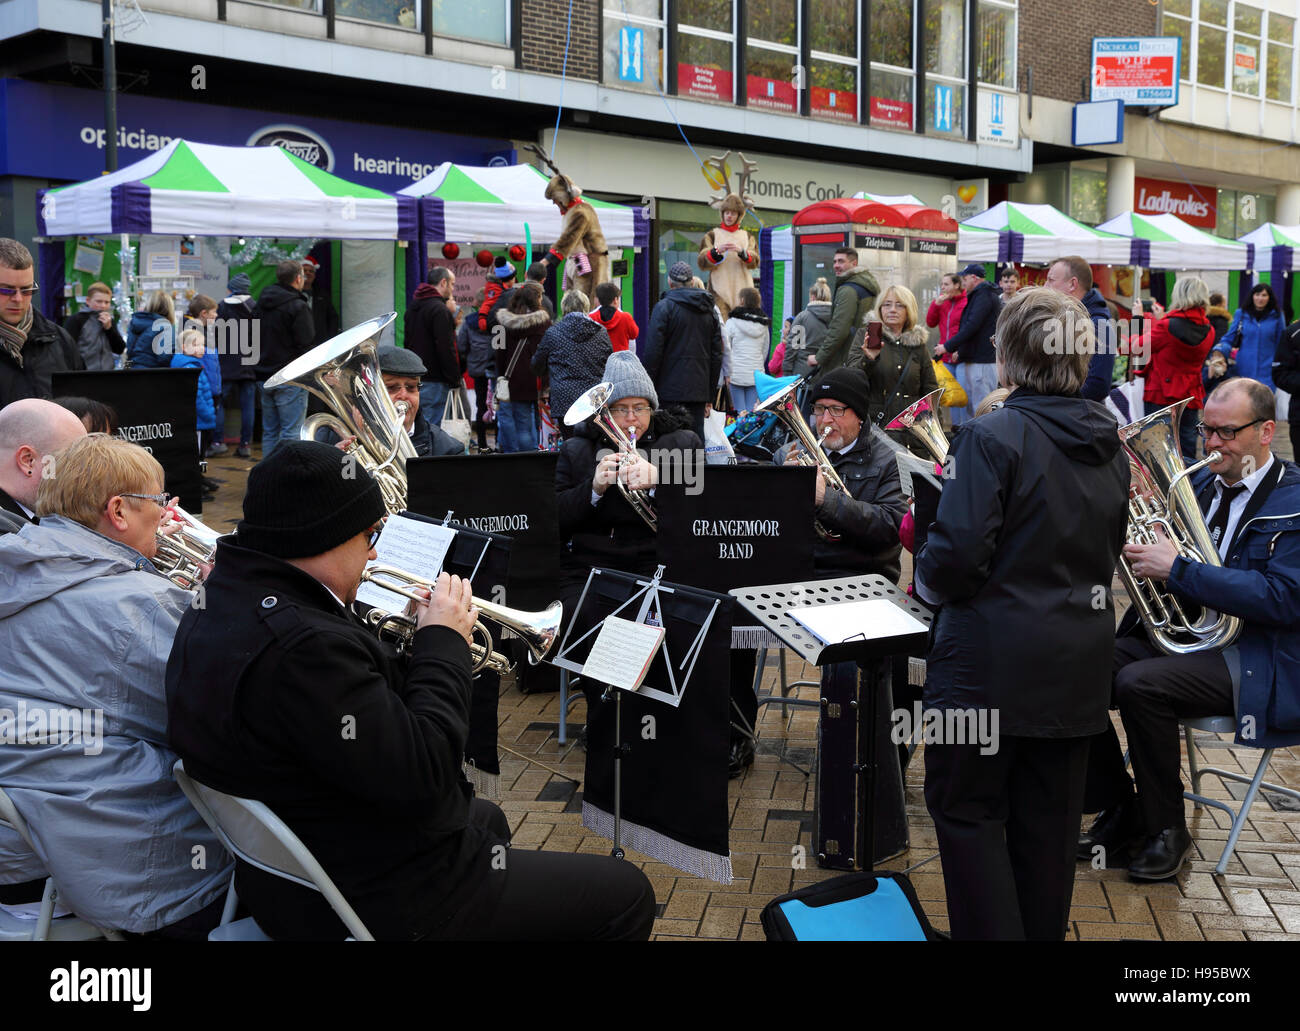 Grangemoor band entertaining visitors at the Wakefield Christmas market, Wakefield, West Yorkshire, UK Stock Photo